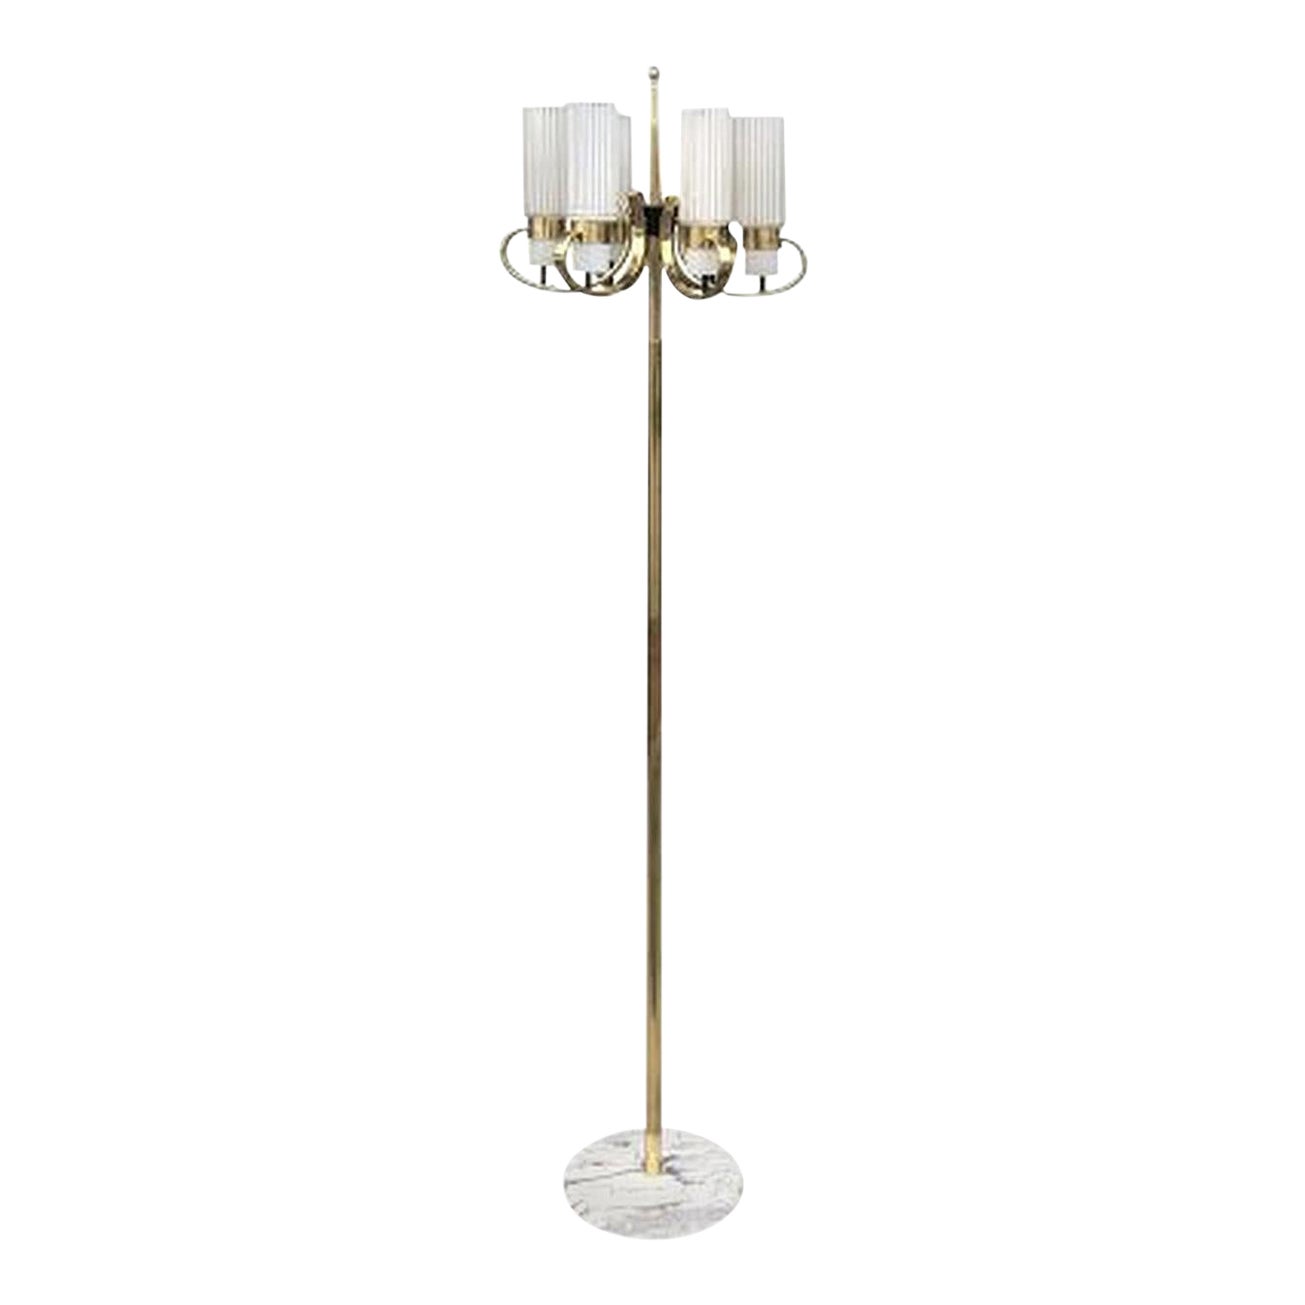 20th Century Italian Marble Floor Lamp - Vintage Light Attributed to Stilnovo For Sale